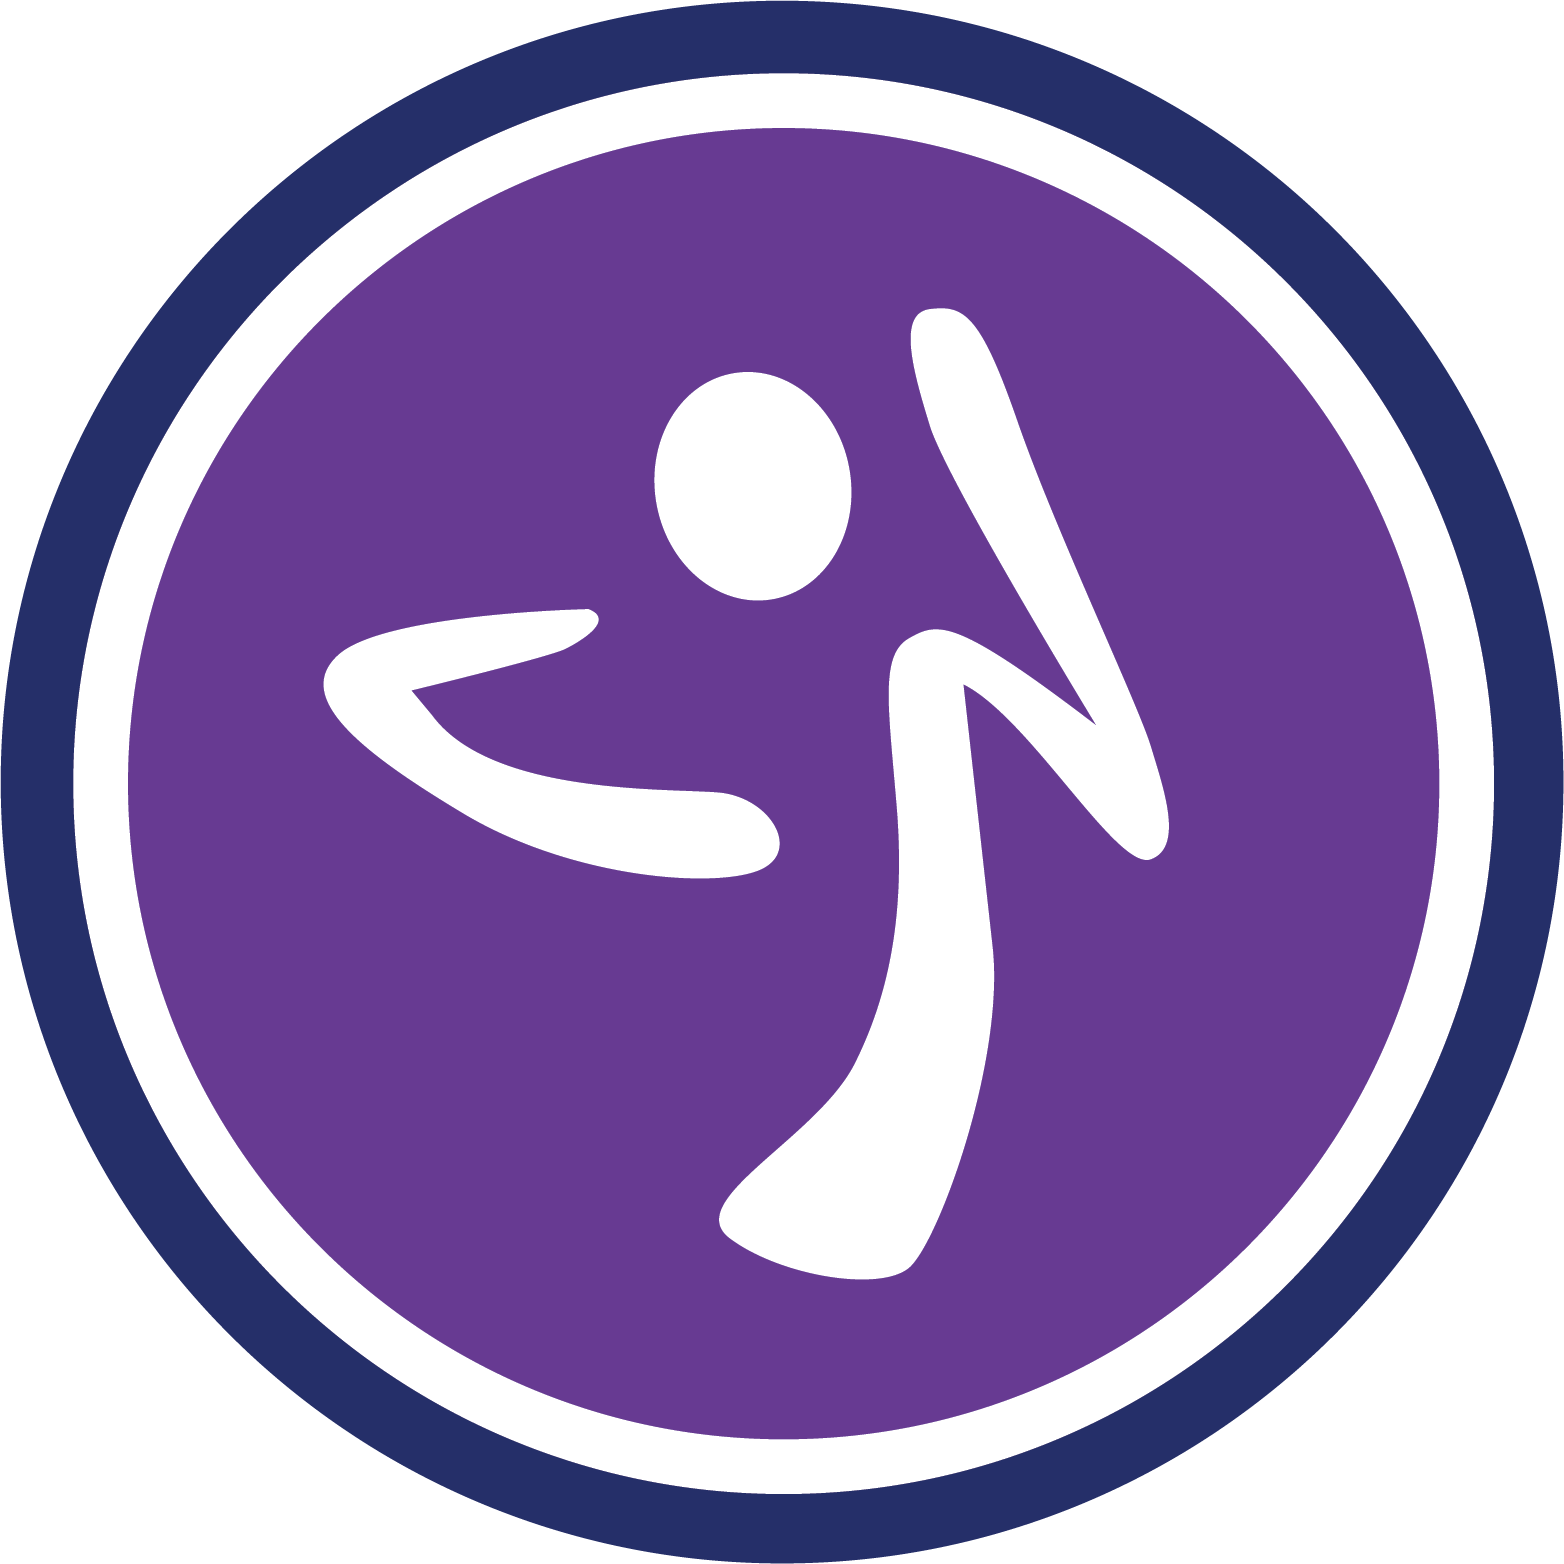 Round purple circle with Zumba logo in white